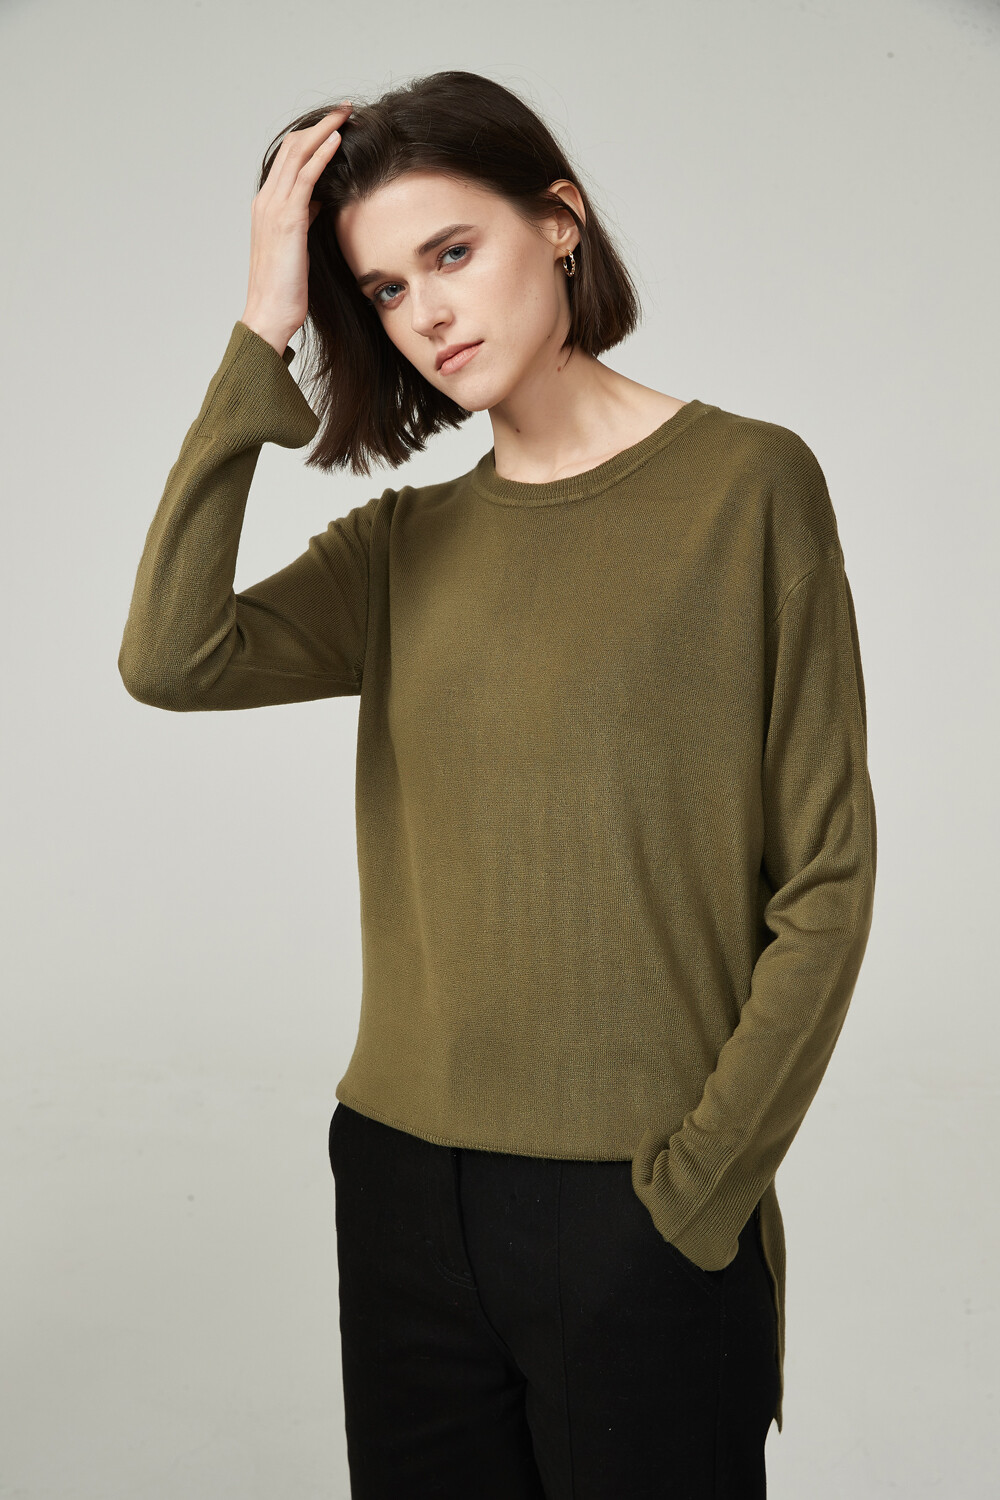 Sweater Baidai Verde Oliva Oscuro